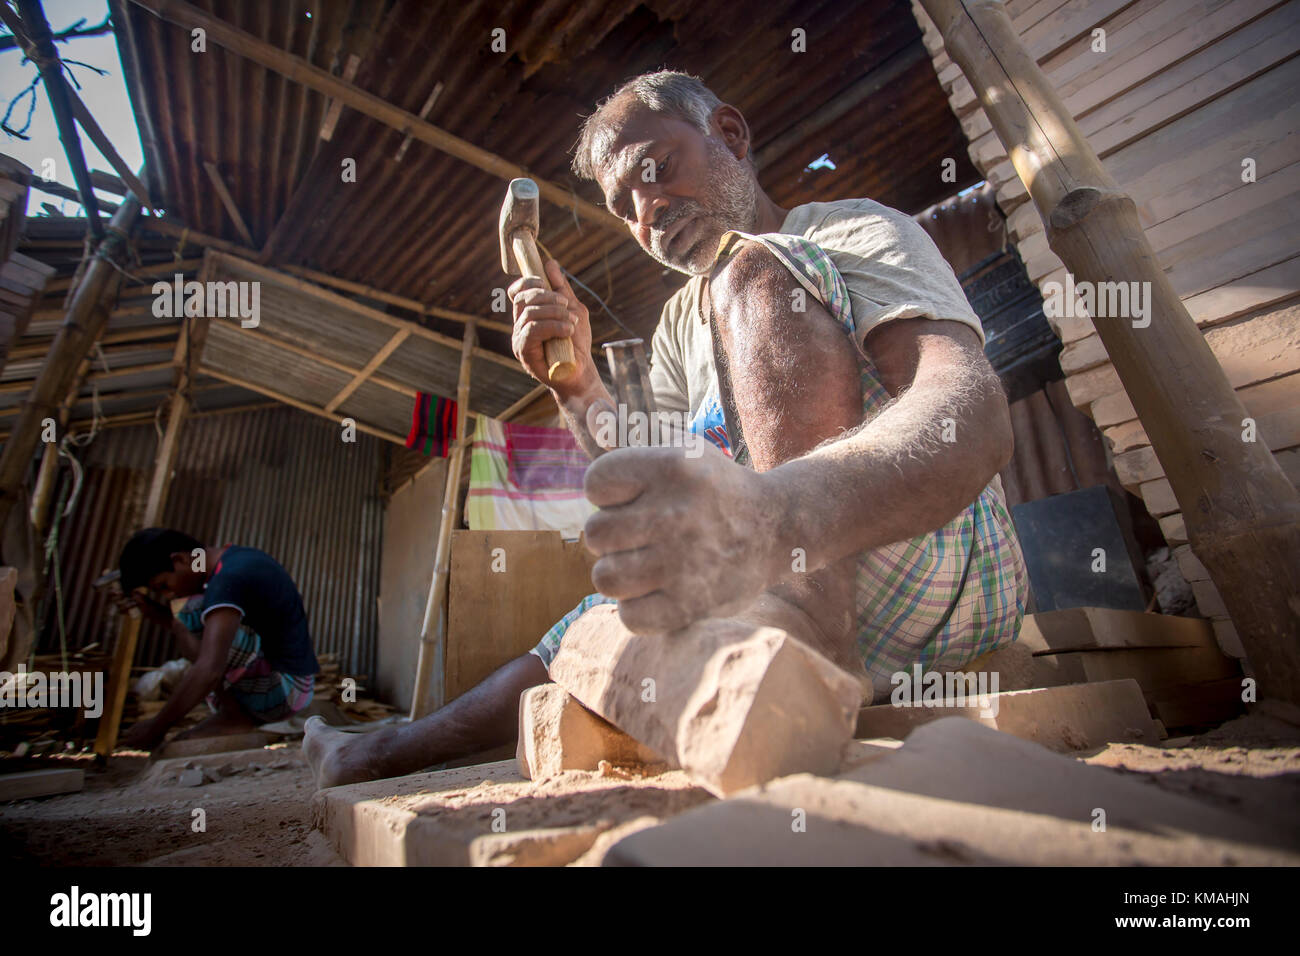 A craftsman (Nirojon Sarkar, Age 55) is busy mending traditional stone grinder, popularly known as Sheel-Pata, in Dhaka, Bangladesh. Stock Photo